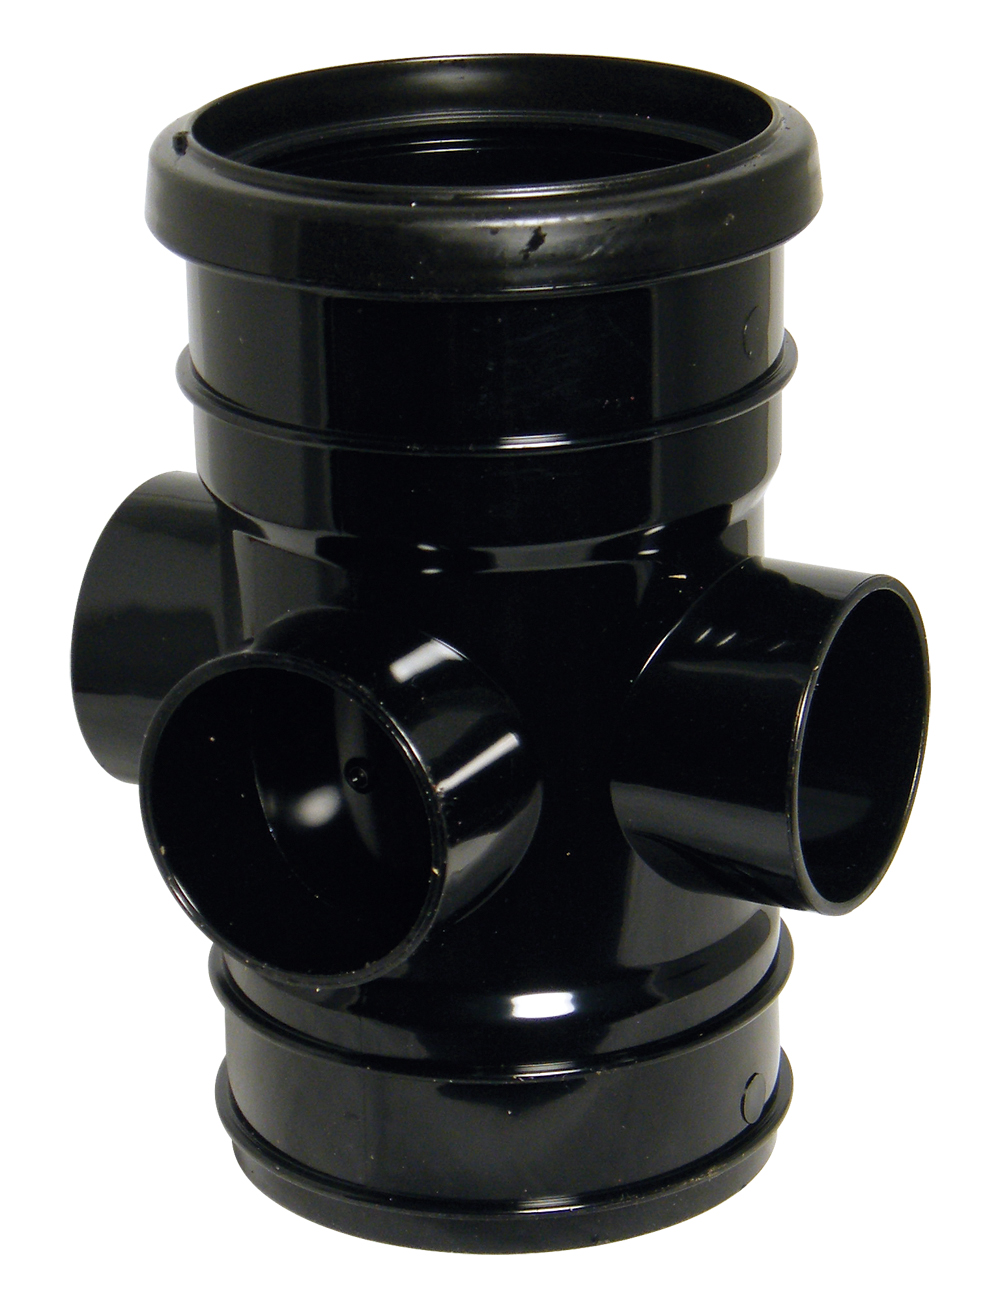 Floplast SP582BL 110mm/4 Inch Ring Seal Soil System - Boss Pipe Double Socket - Black